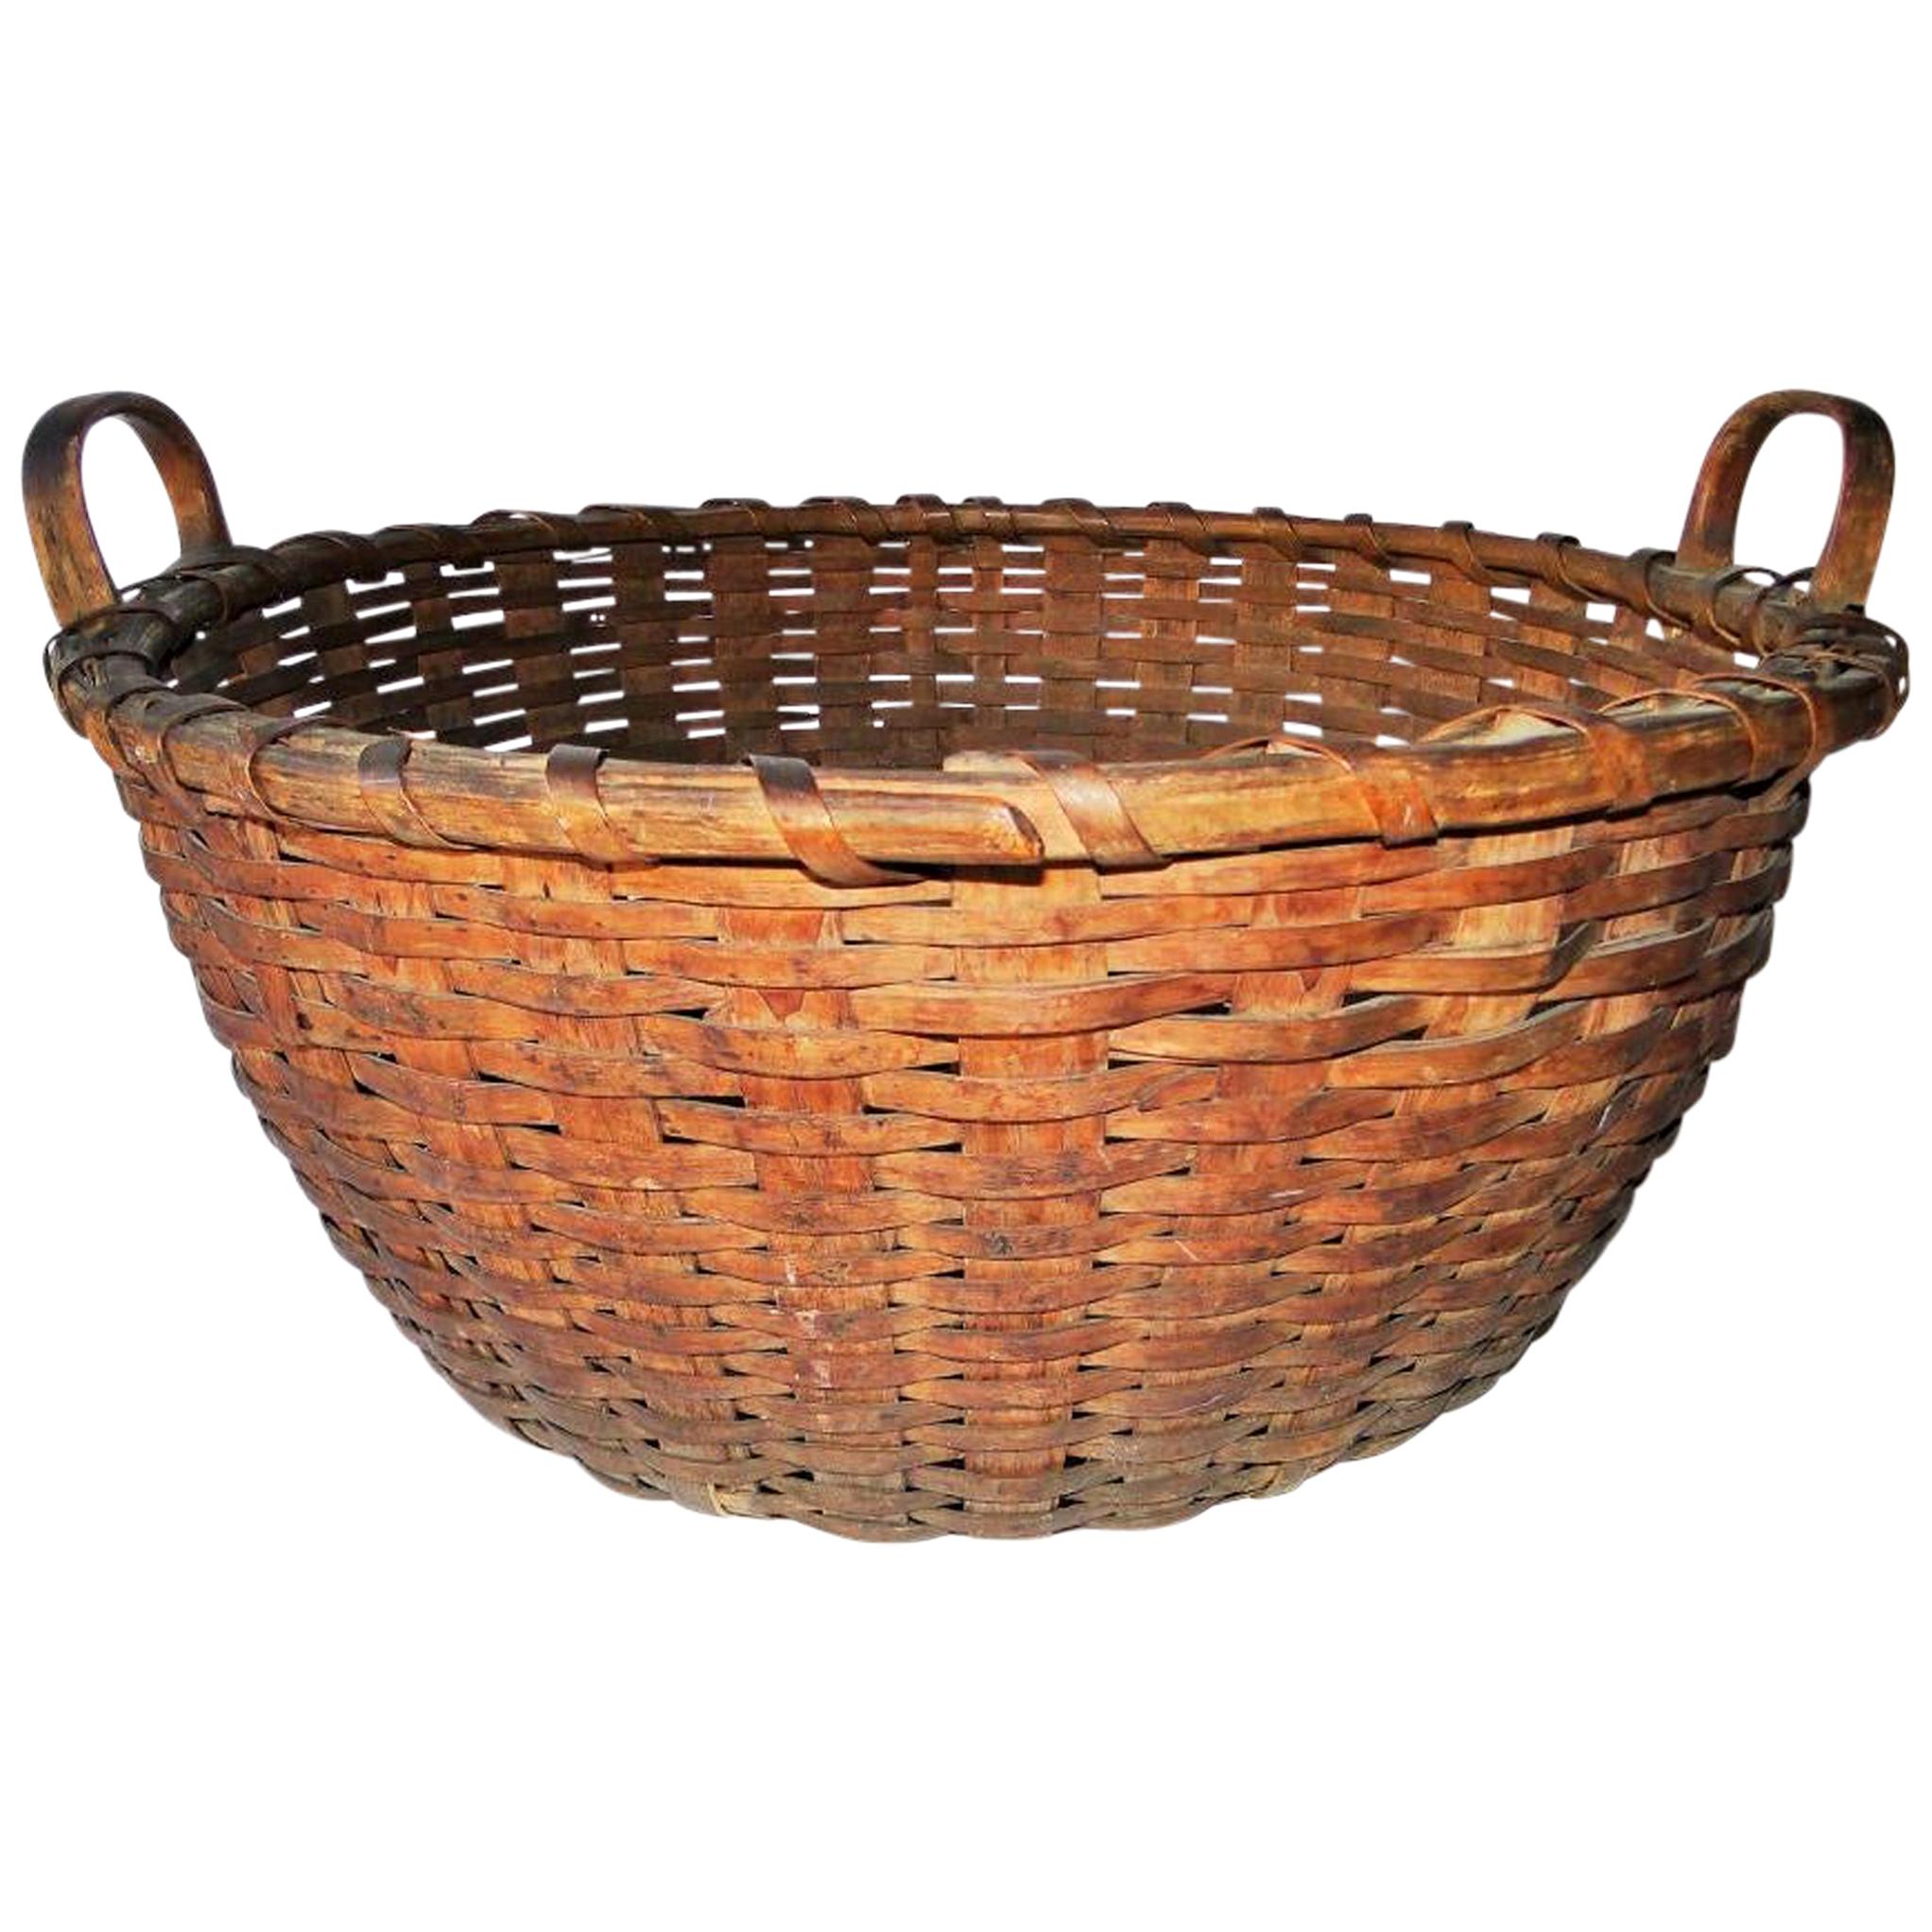 Large 19th Century American Cat Head Basket